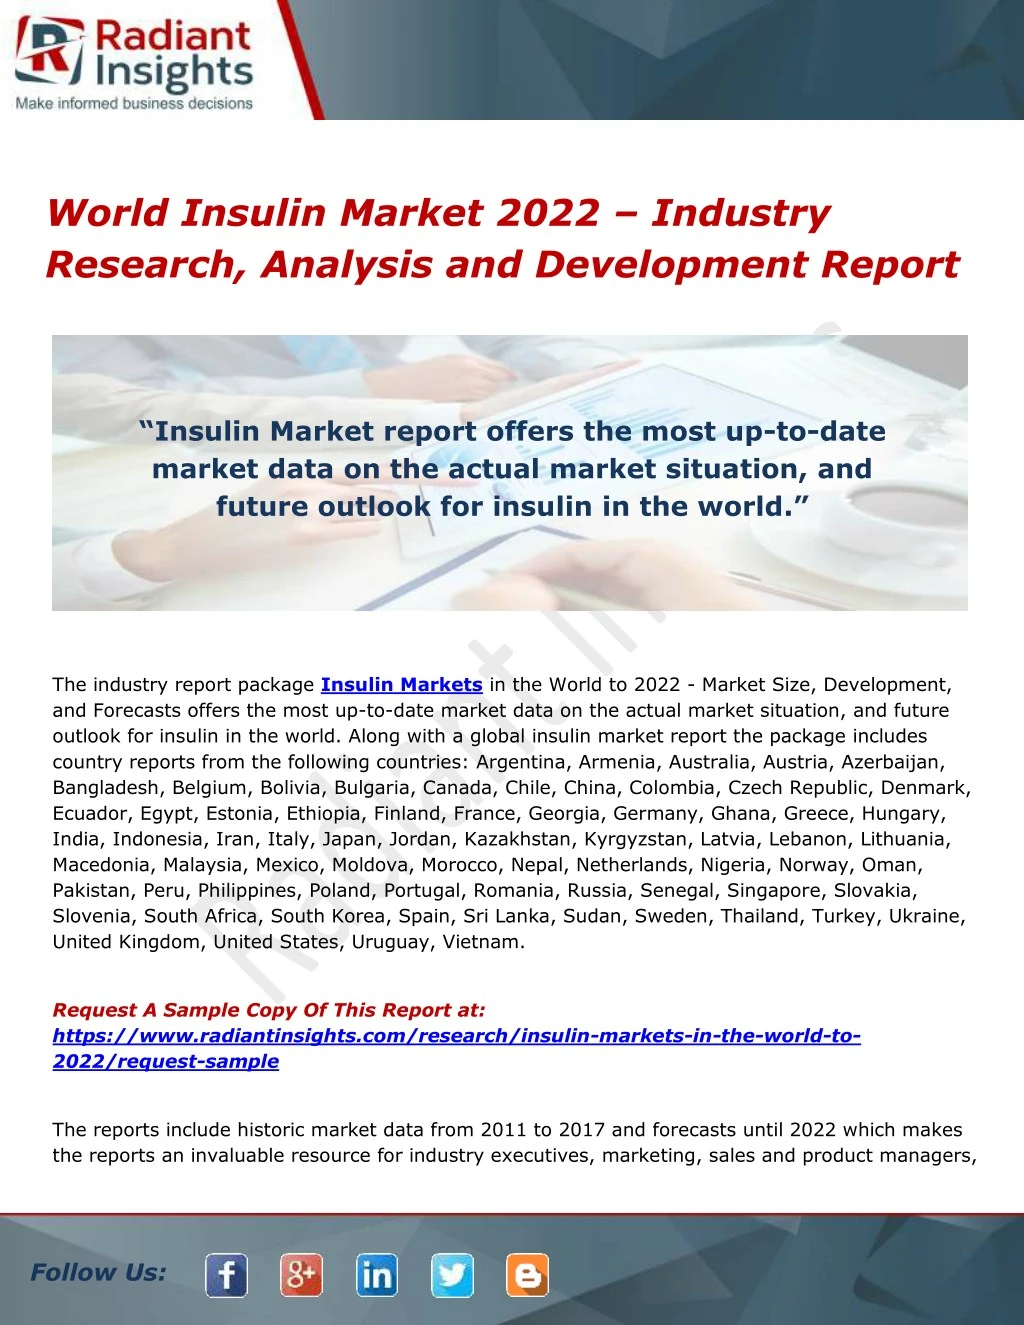 world insulin market 2022 industry research